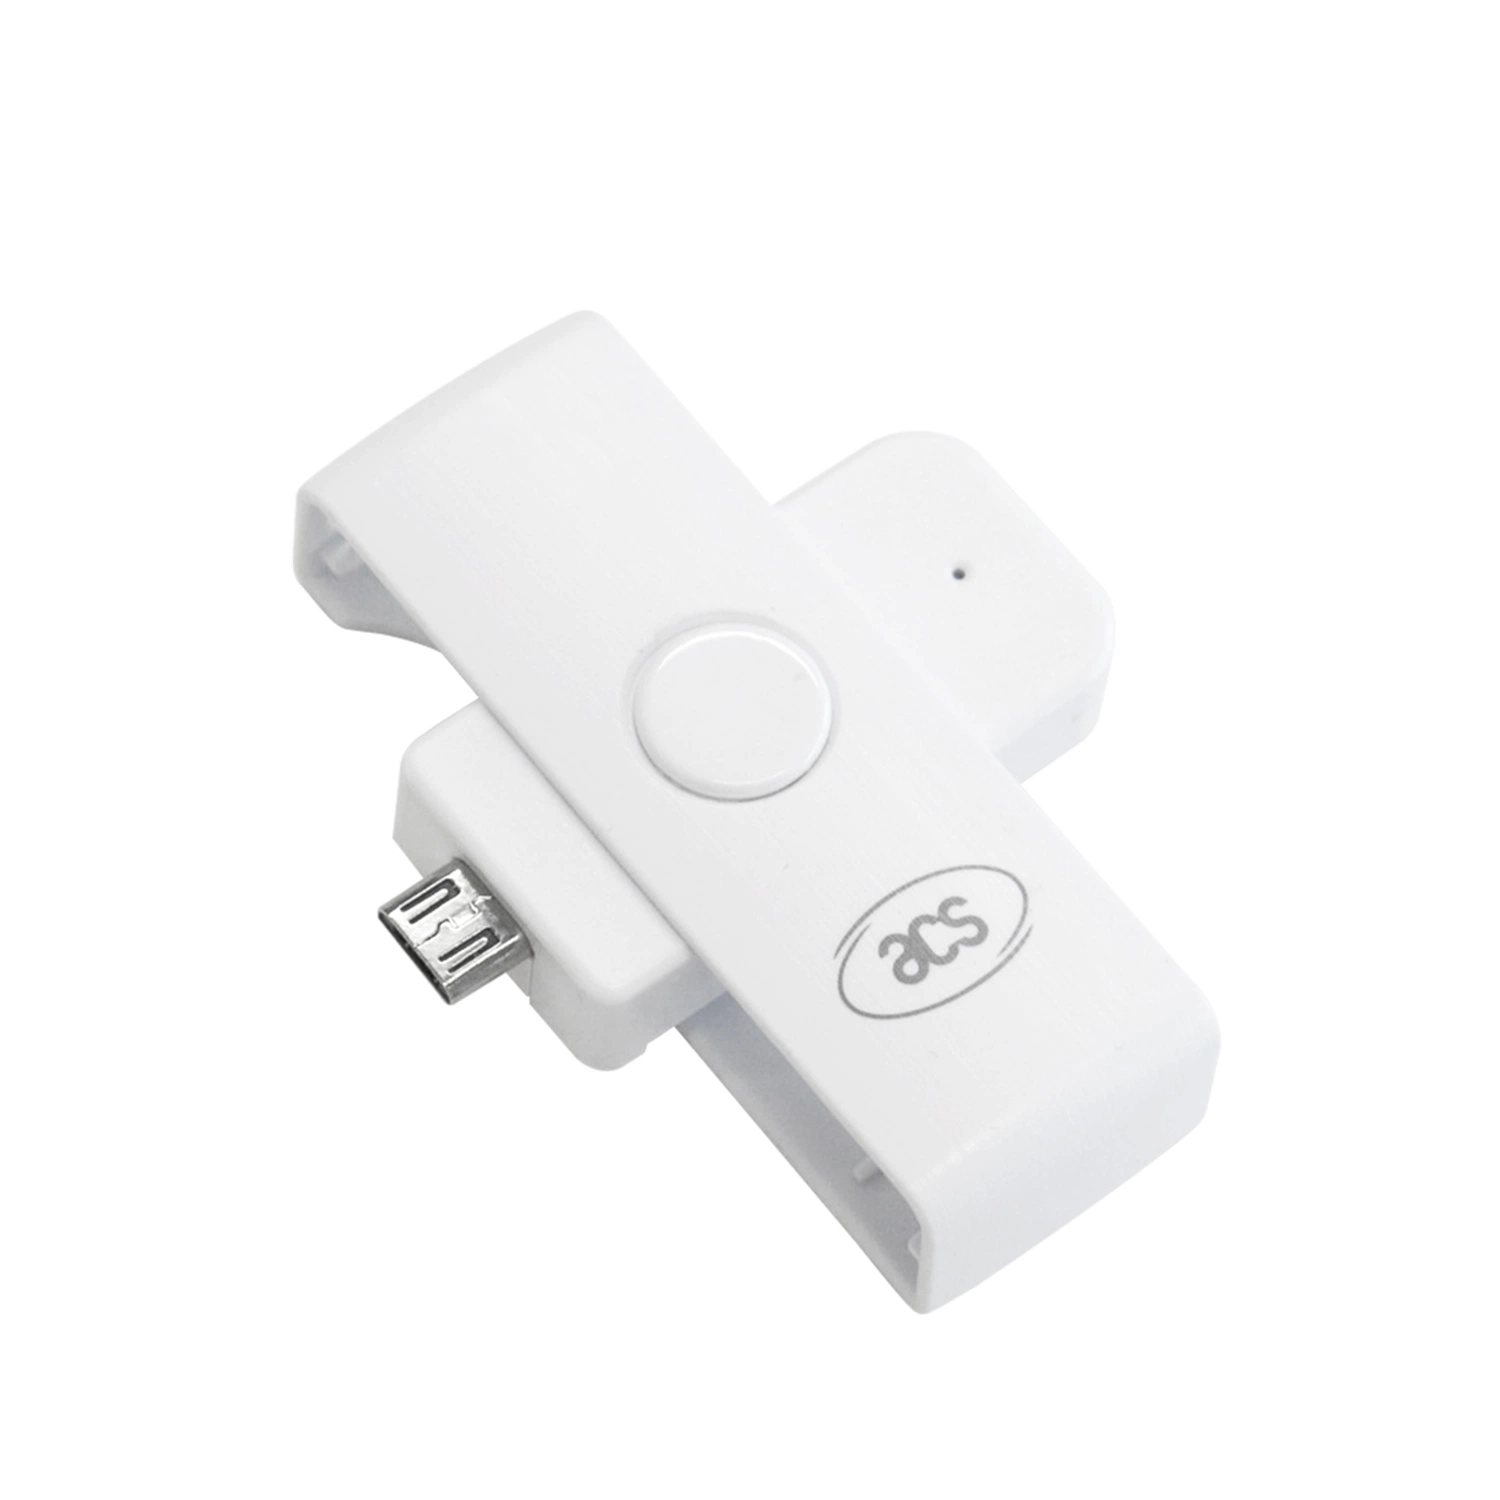 Tarjeta inteligente Micro USB OTG CCID Ios 7816 de tamaño mini Lector (ACR39U-ND)